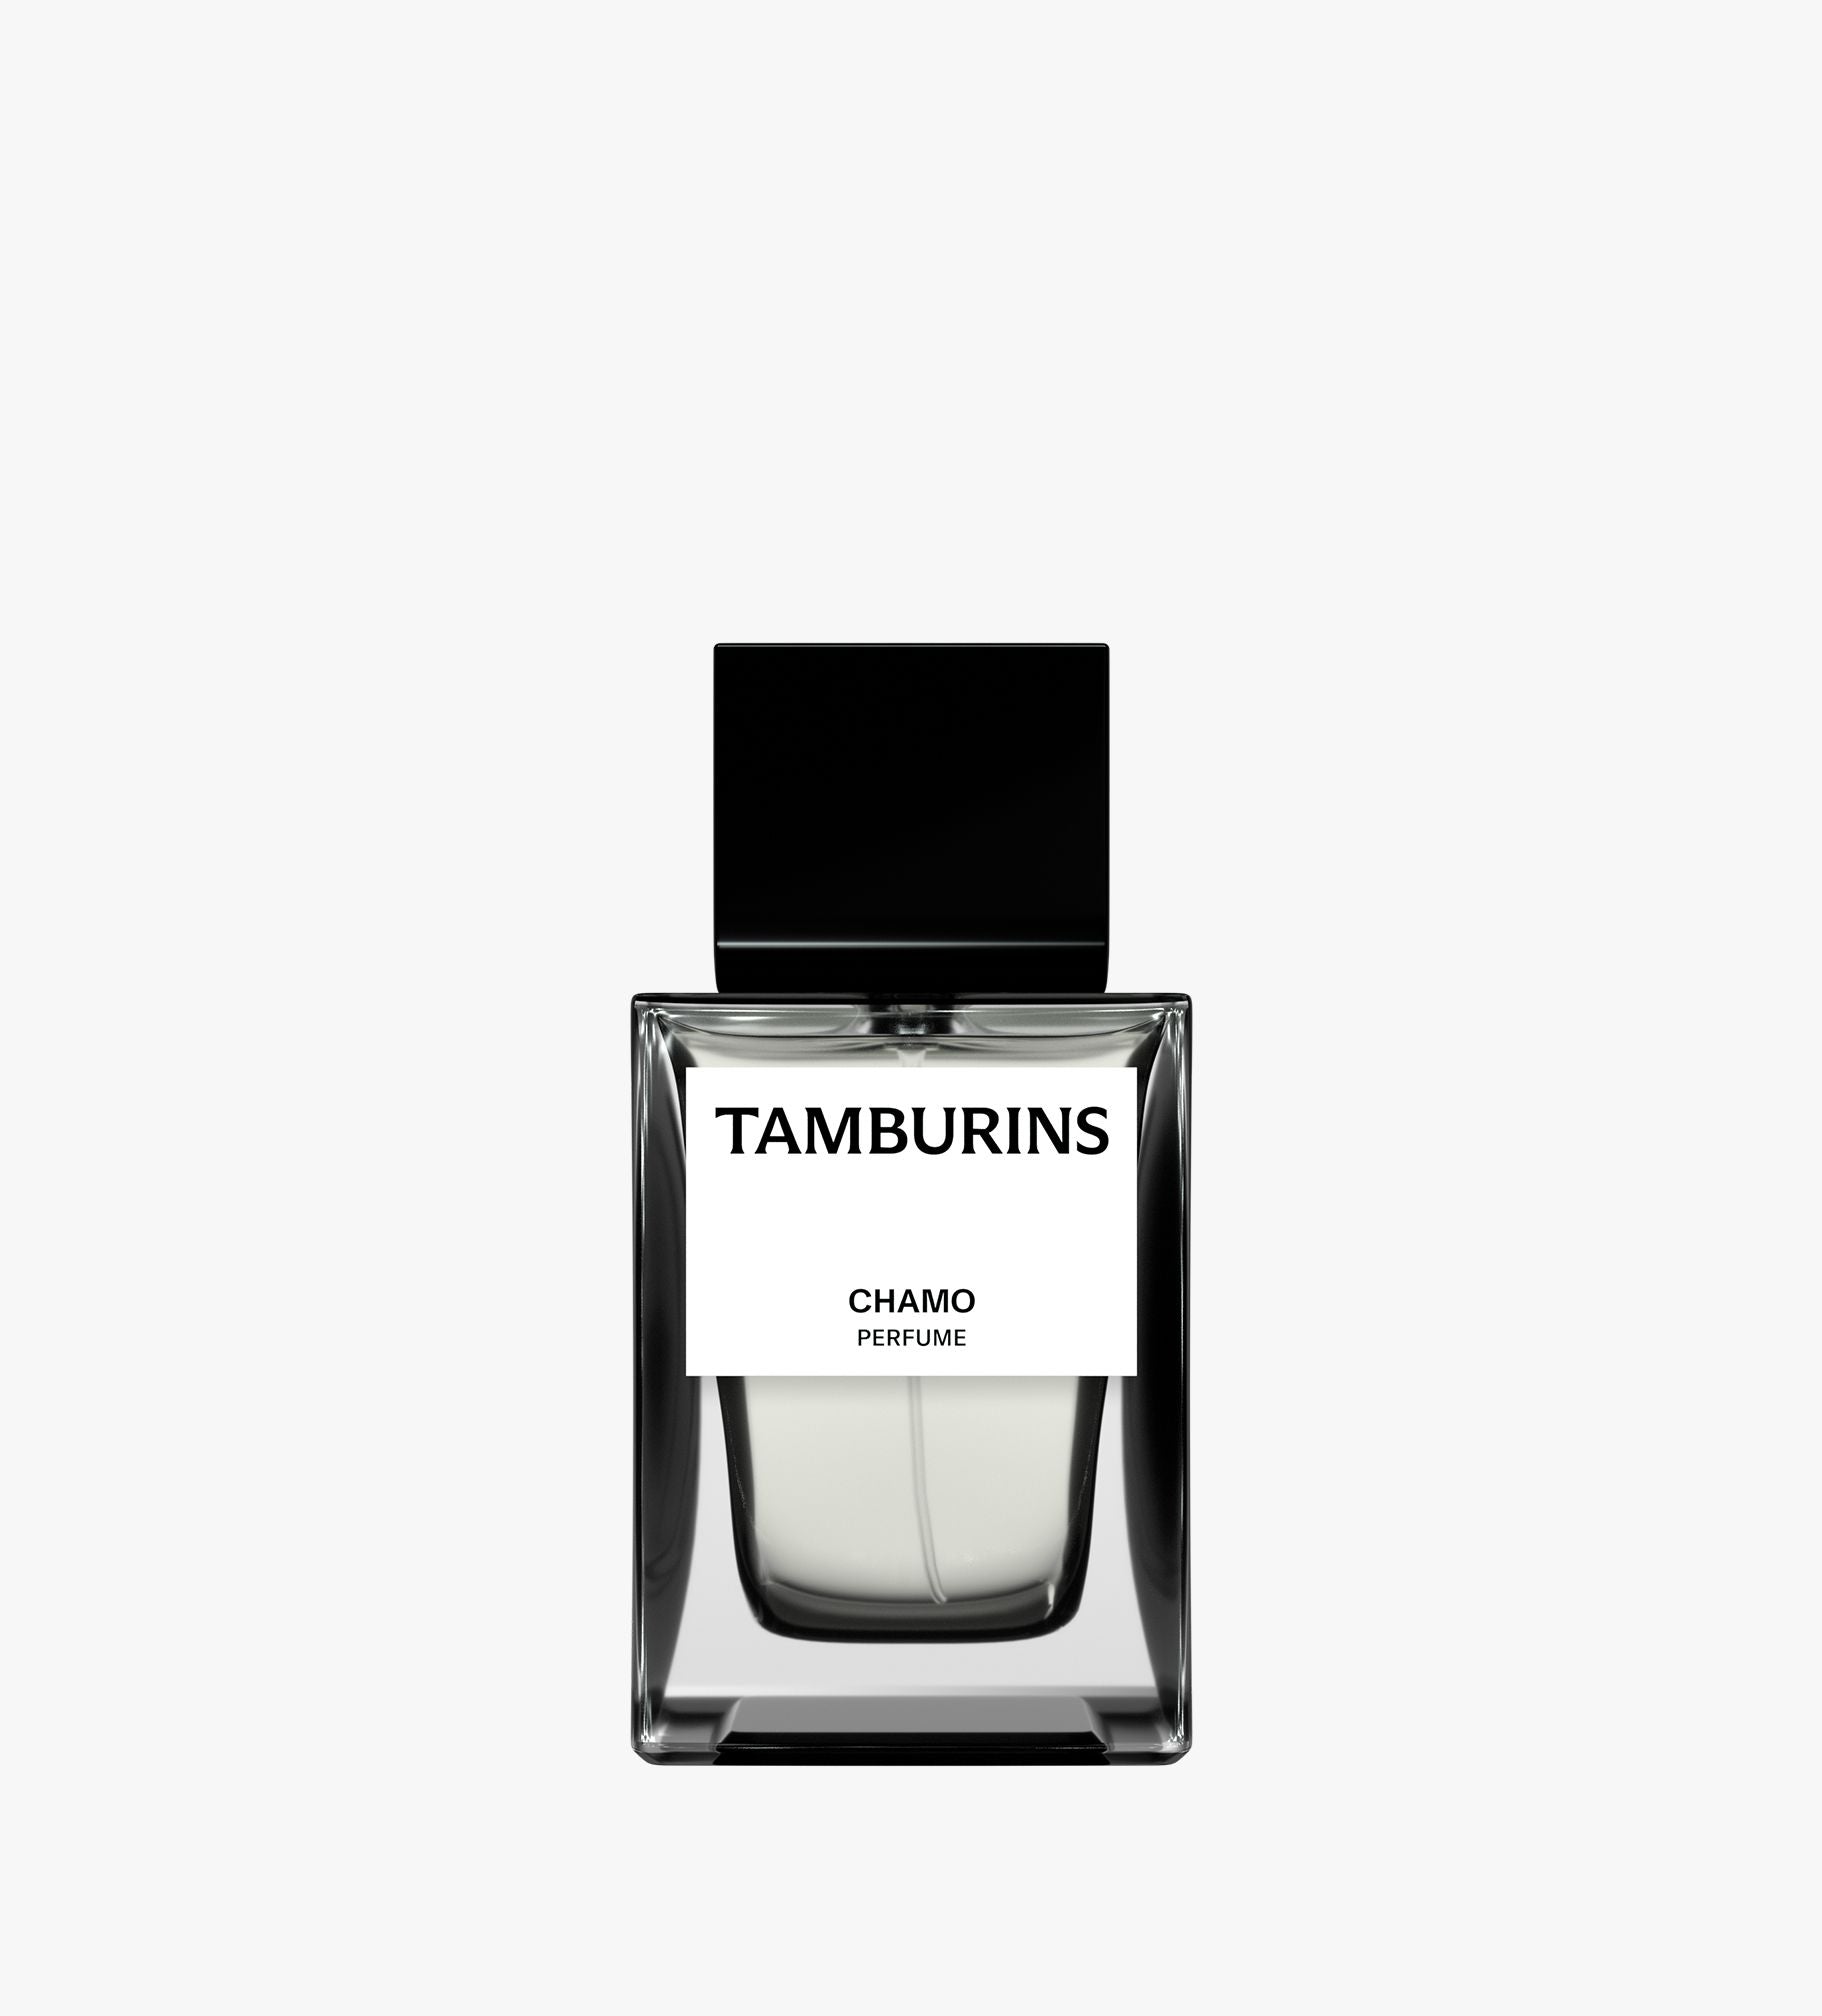  50ml TAMBURINS Perfume in #Chamo fragrance, elegant and compact design.